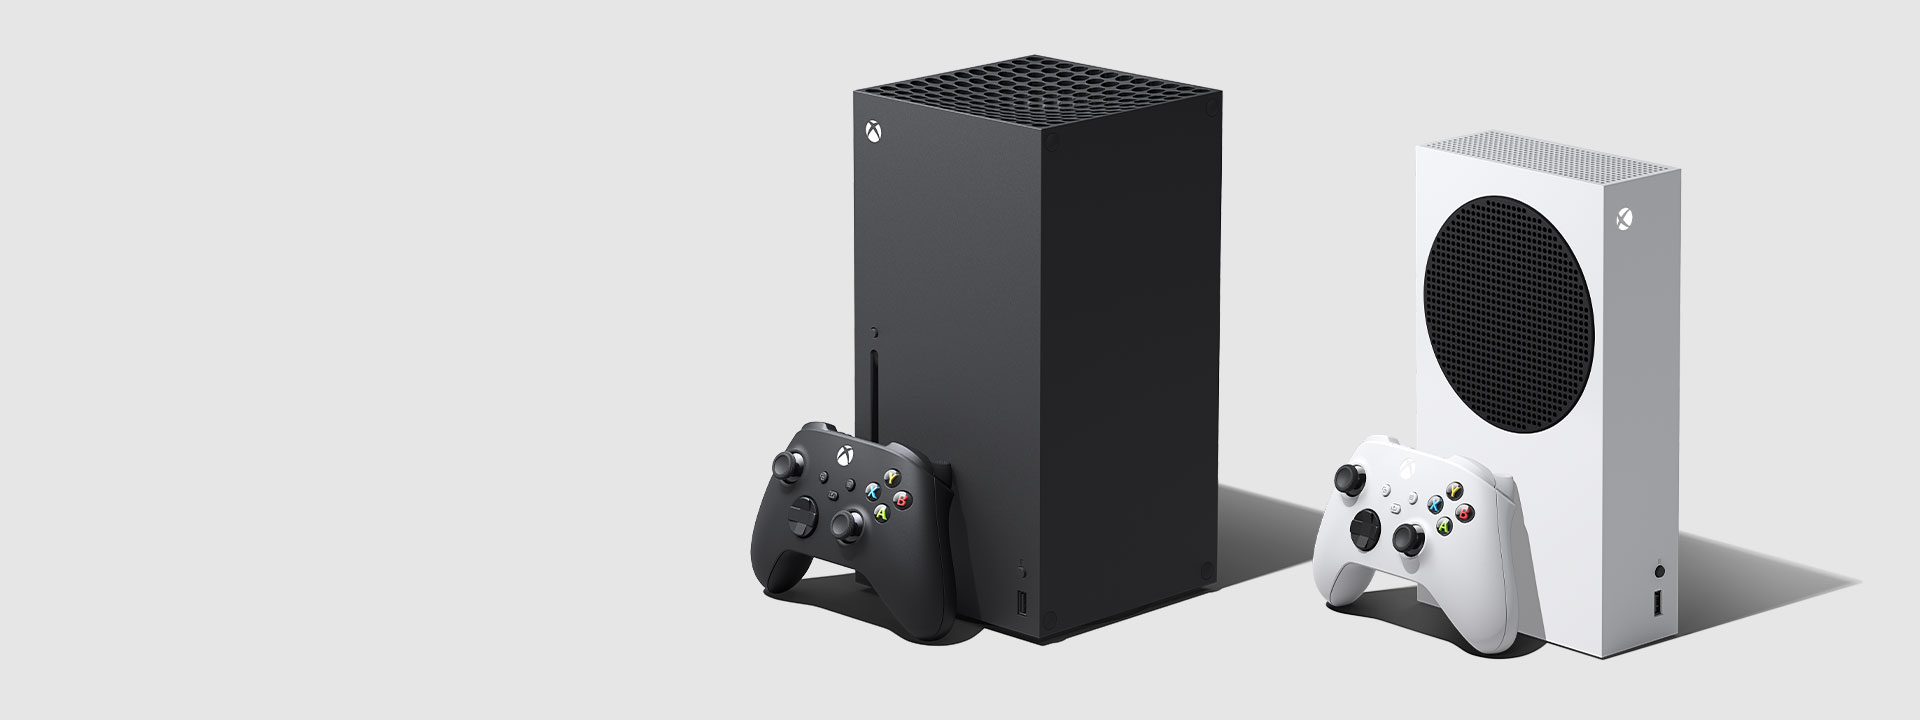  Xbox Series X mit schwarzem Xbox-Controller und Xbox Series S mit weißem Xbox-Controller aufrecht